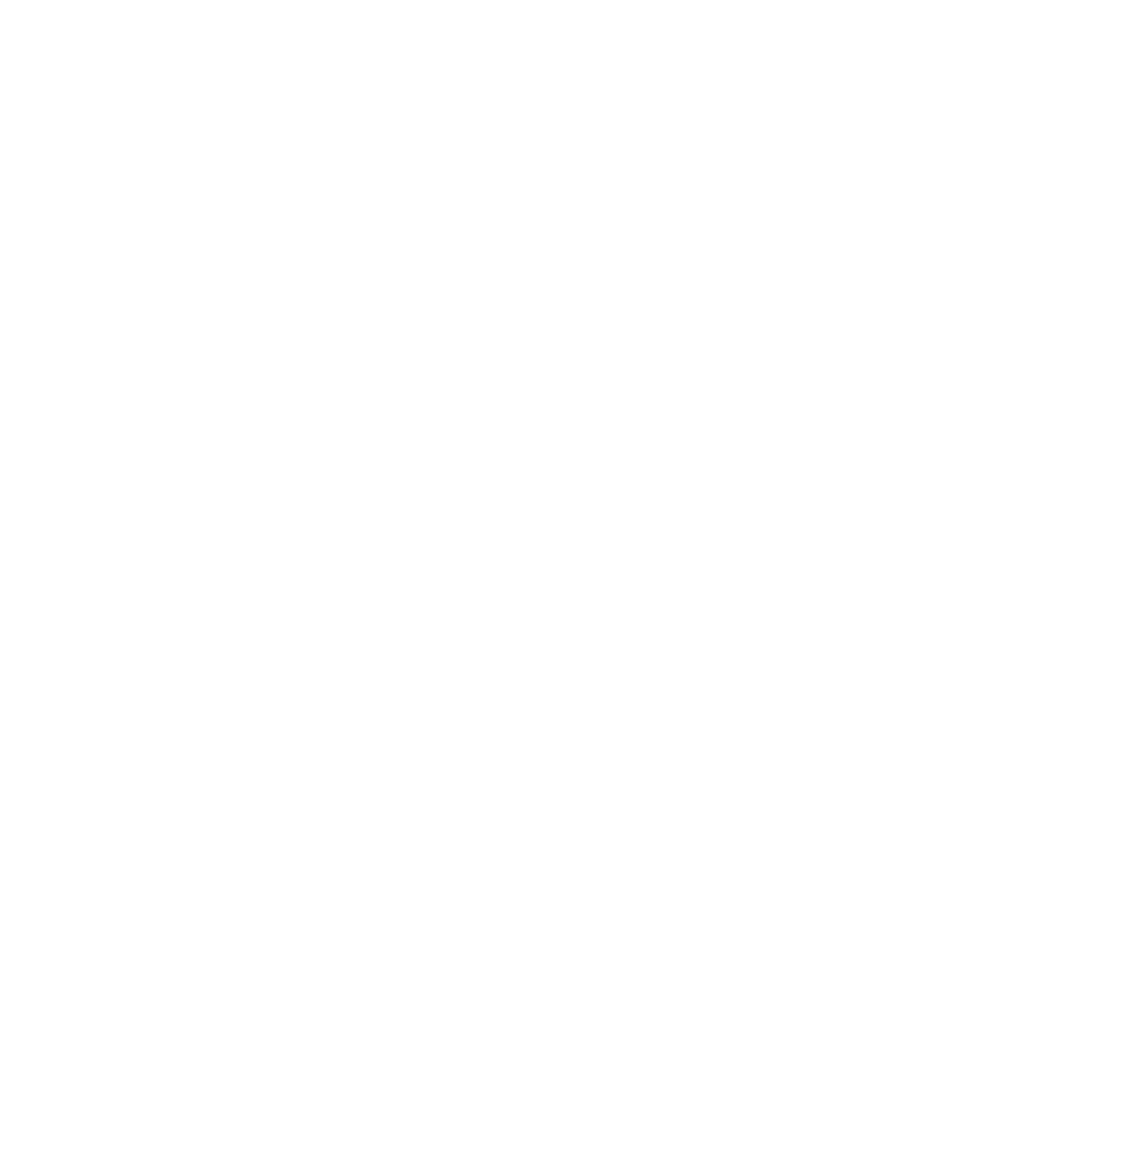 CHRIS PAUL FAMILY FOUNDATION